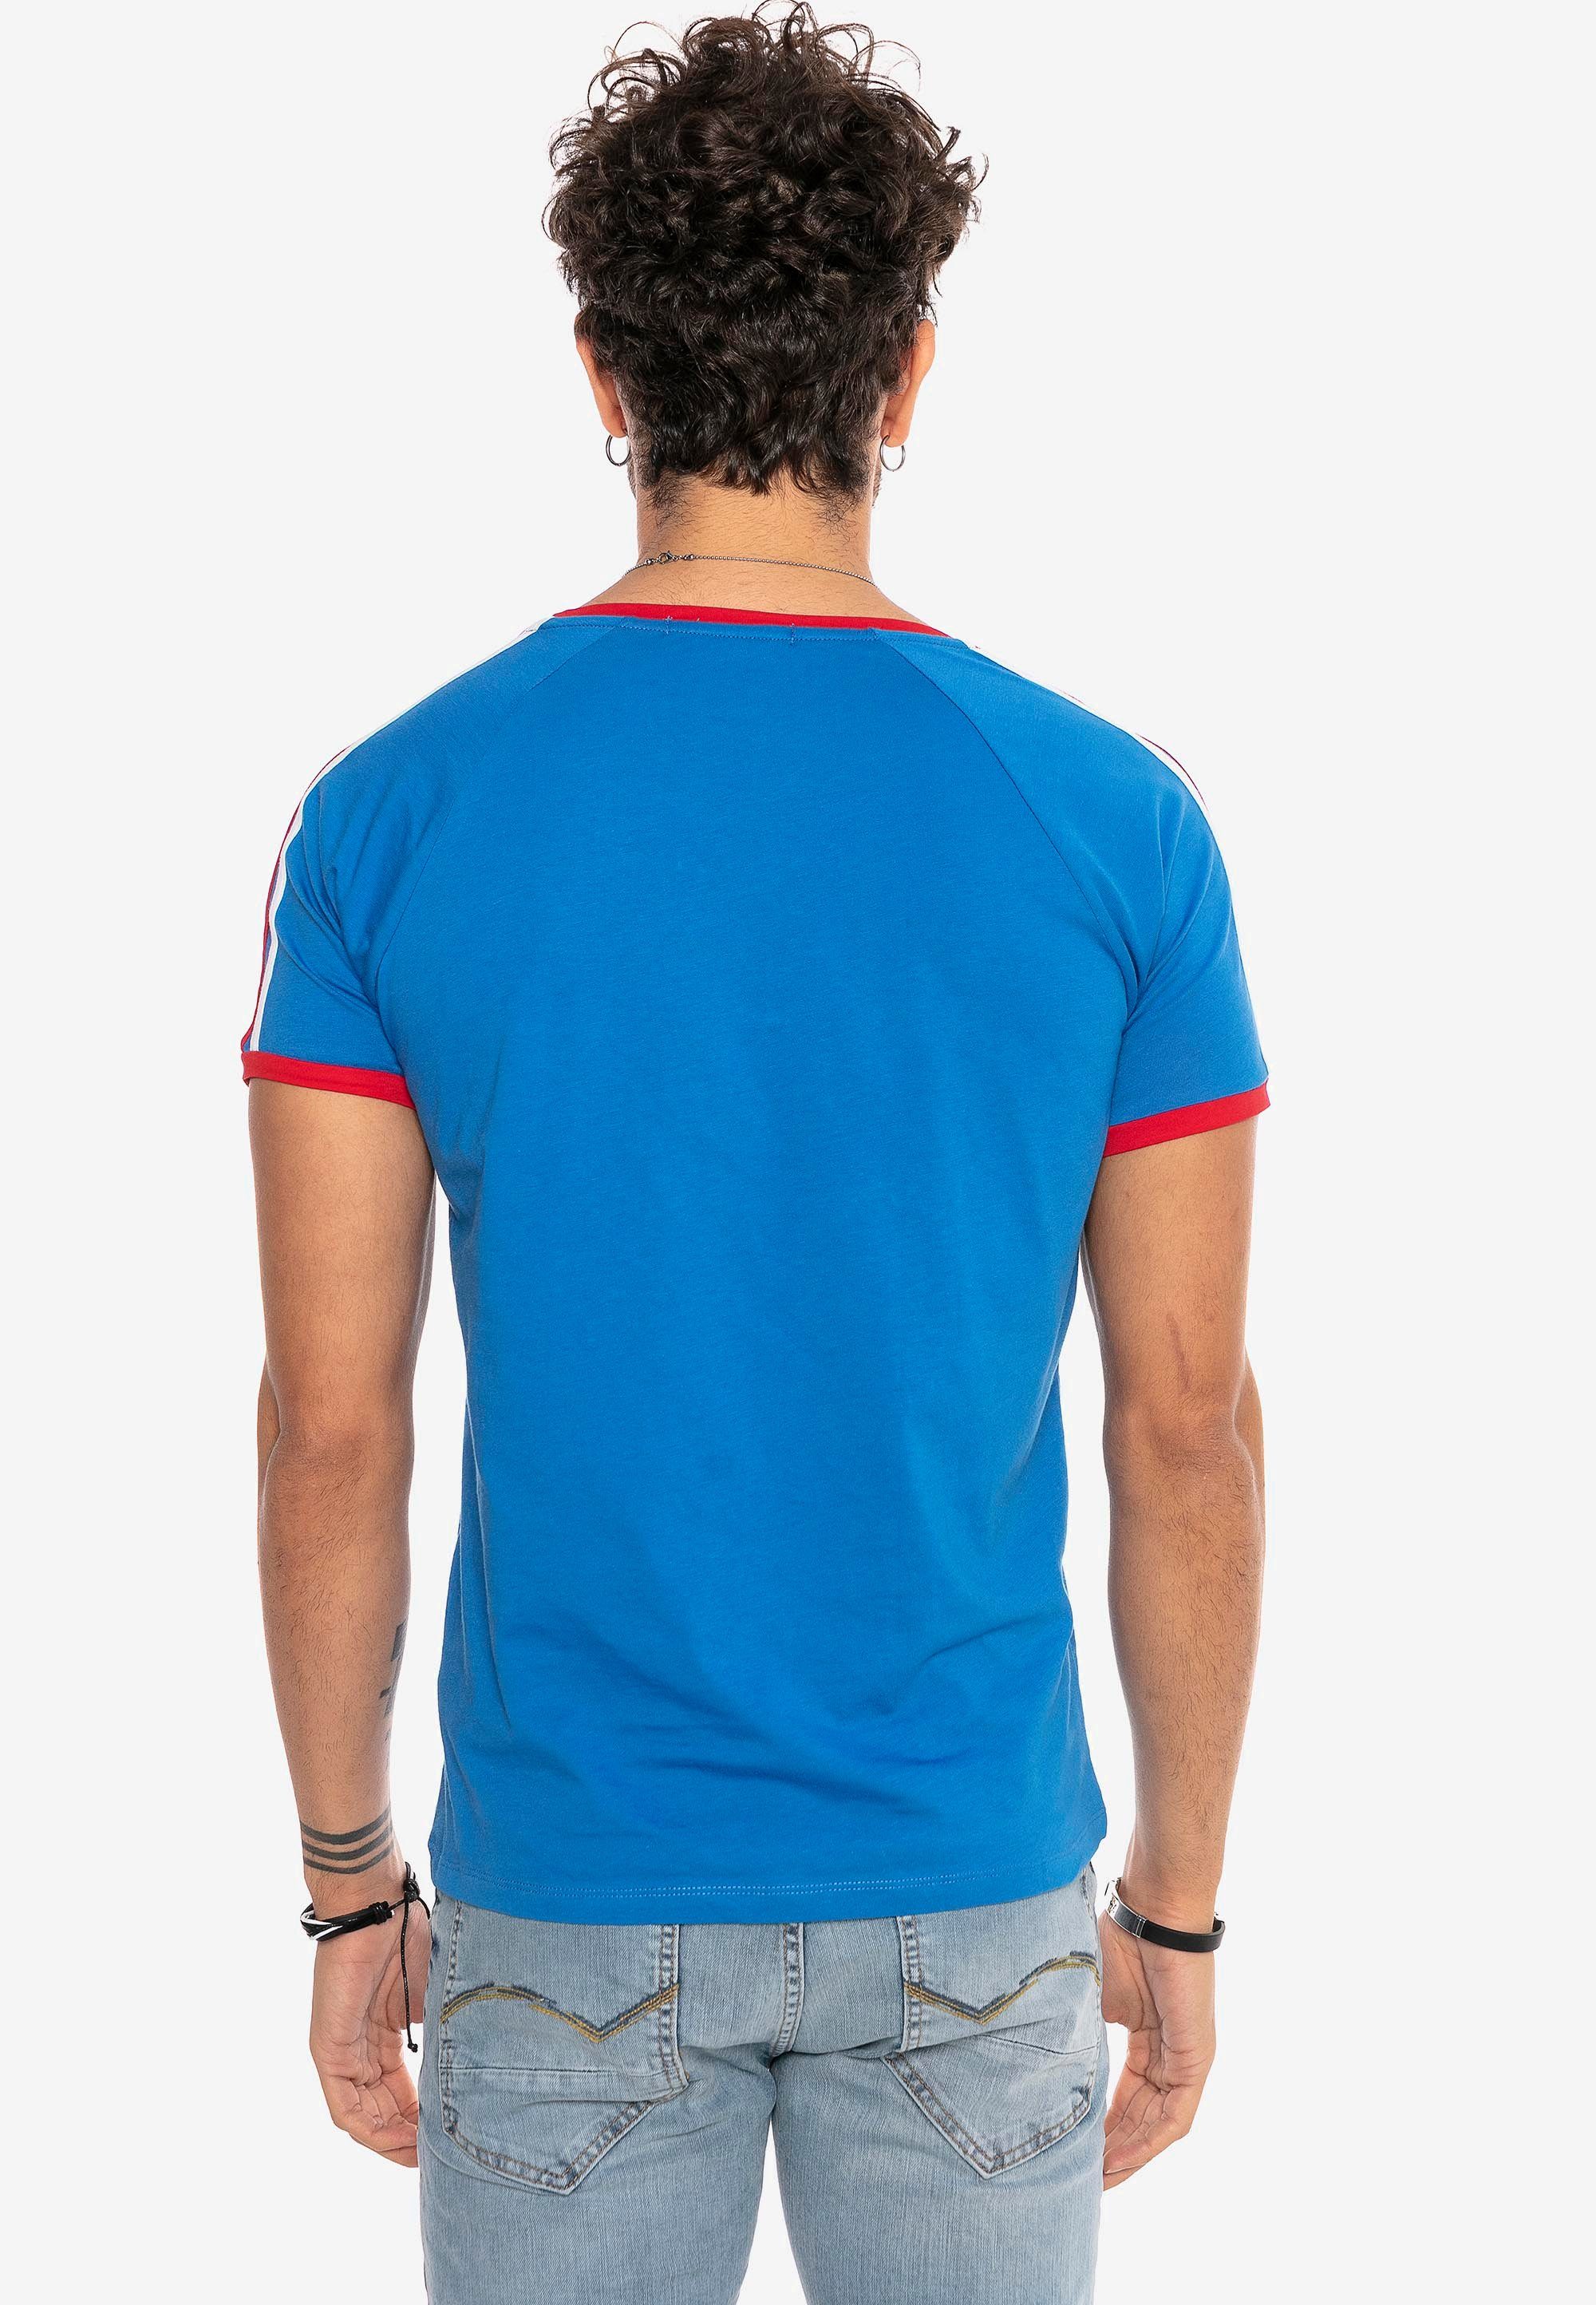 Herren Shirts RedBridge T-Shirt Mesa mit gesticktem NASA Logo